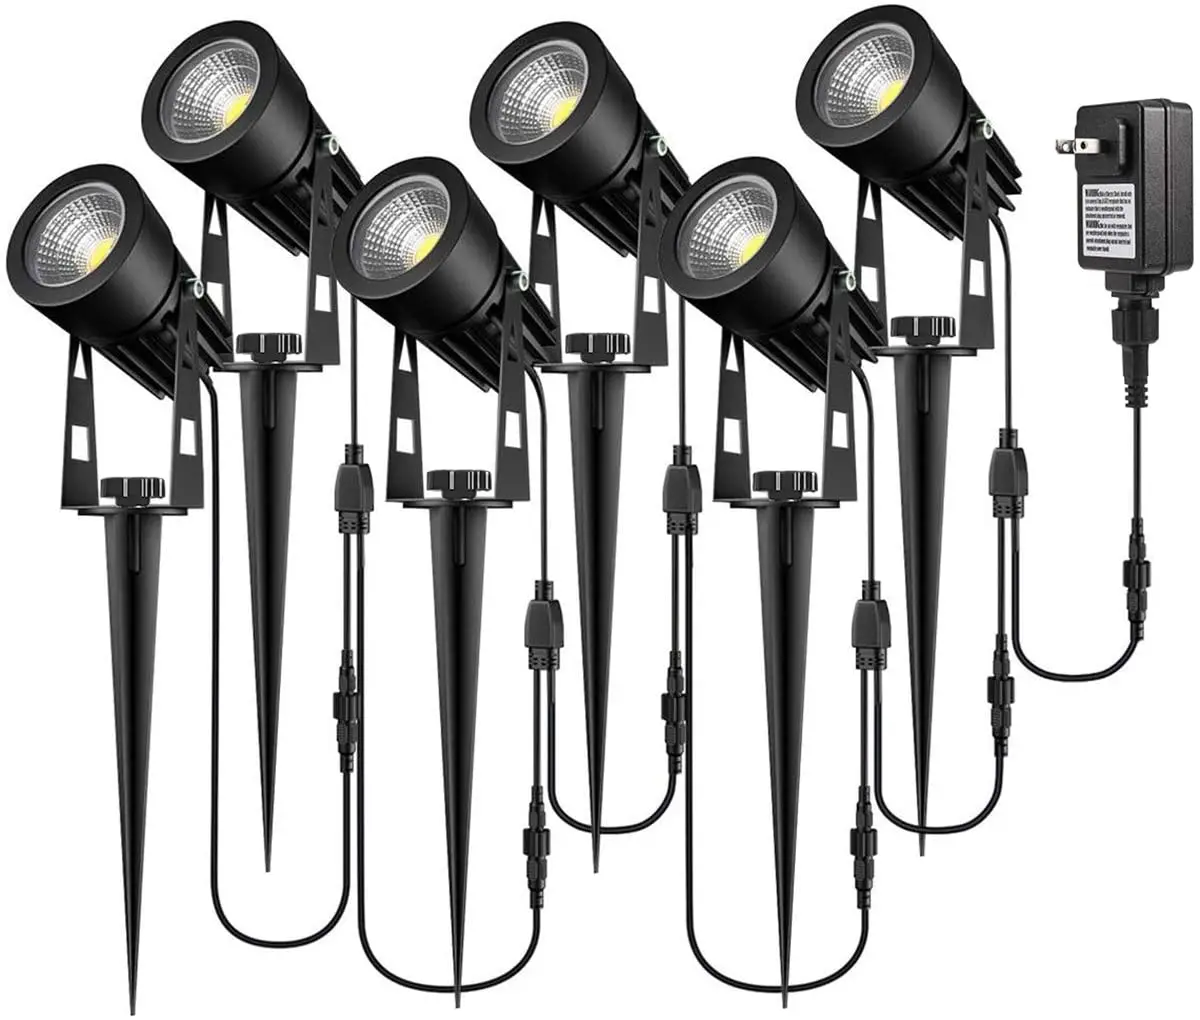 Best sale customized 6 head solar power spotlights landscape decoration lights outdoor garden lights IP65 waterproof